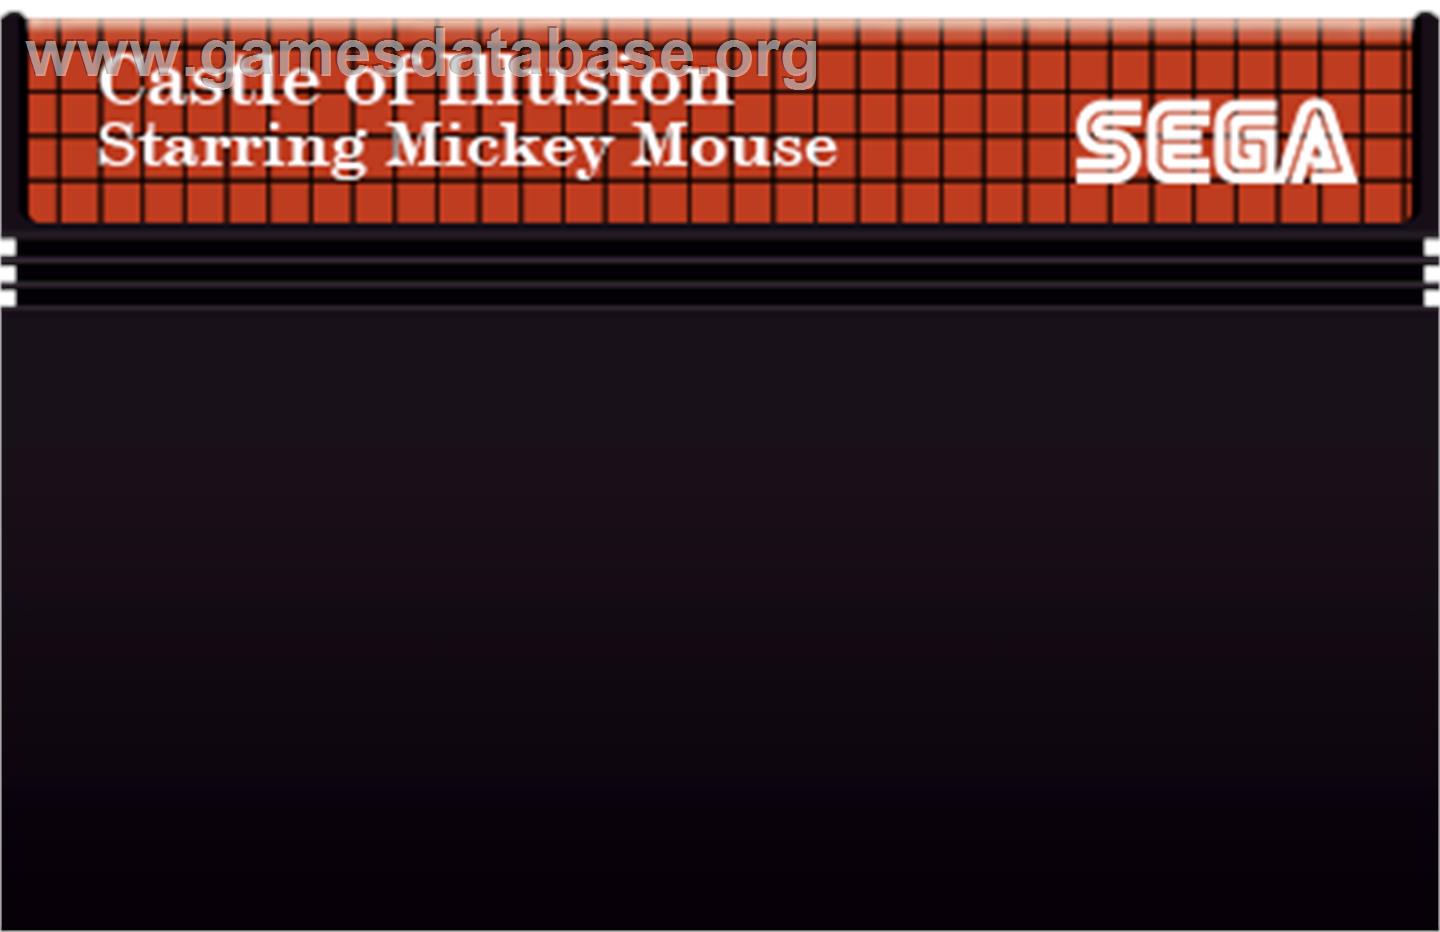 Castle of Illusion starring Mickey Mouse - Sega Master System - Artwork - Cartridge